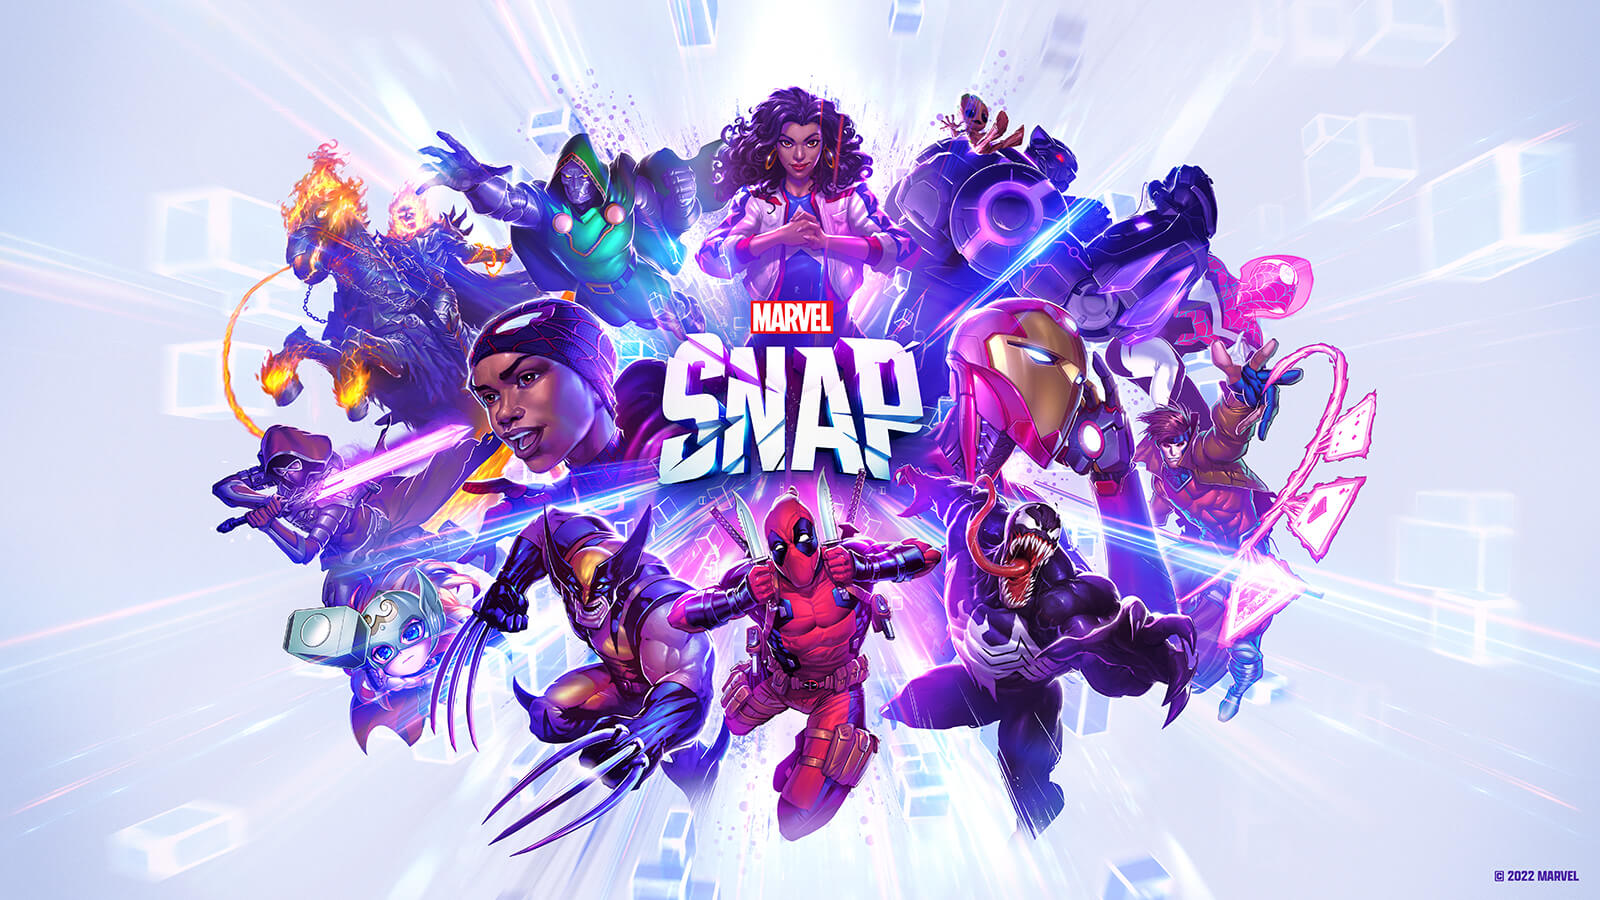 Free-To-Play Marvel Snap Has Already Made Over $30 Million